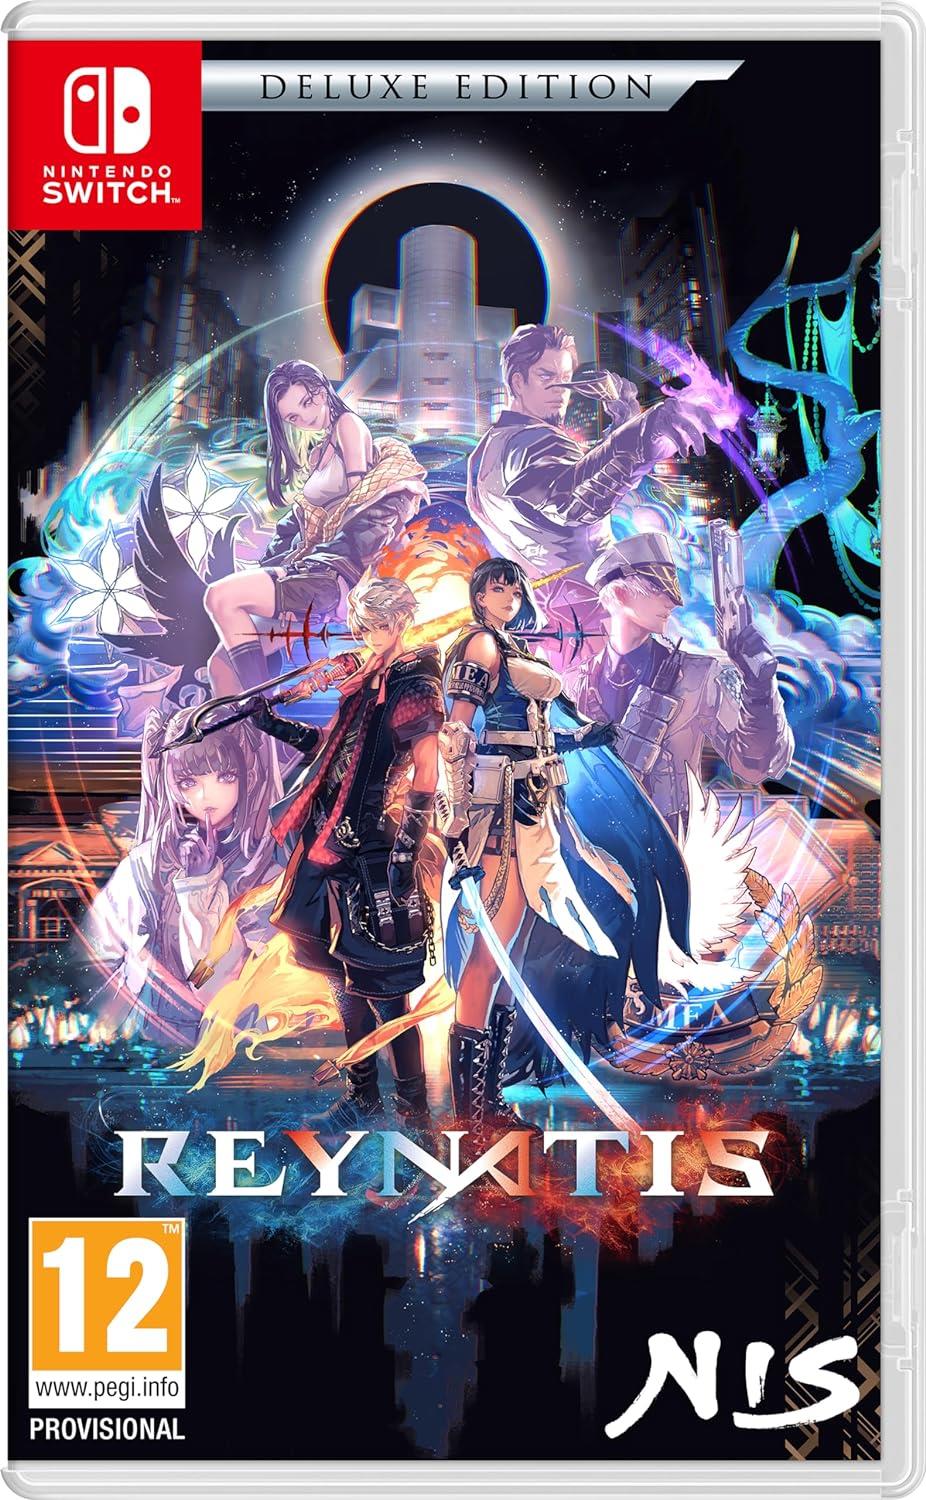 REYNATIS Deluxe Edition Nintendo Switch Game